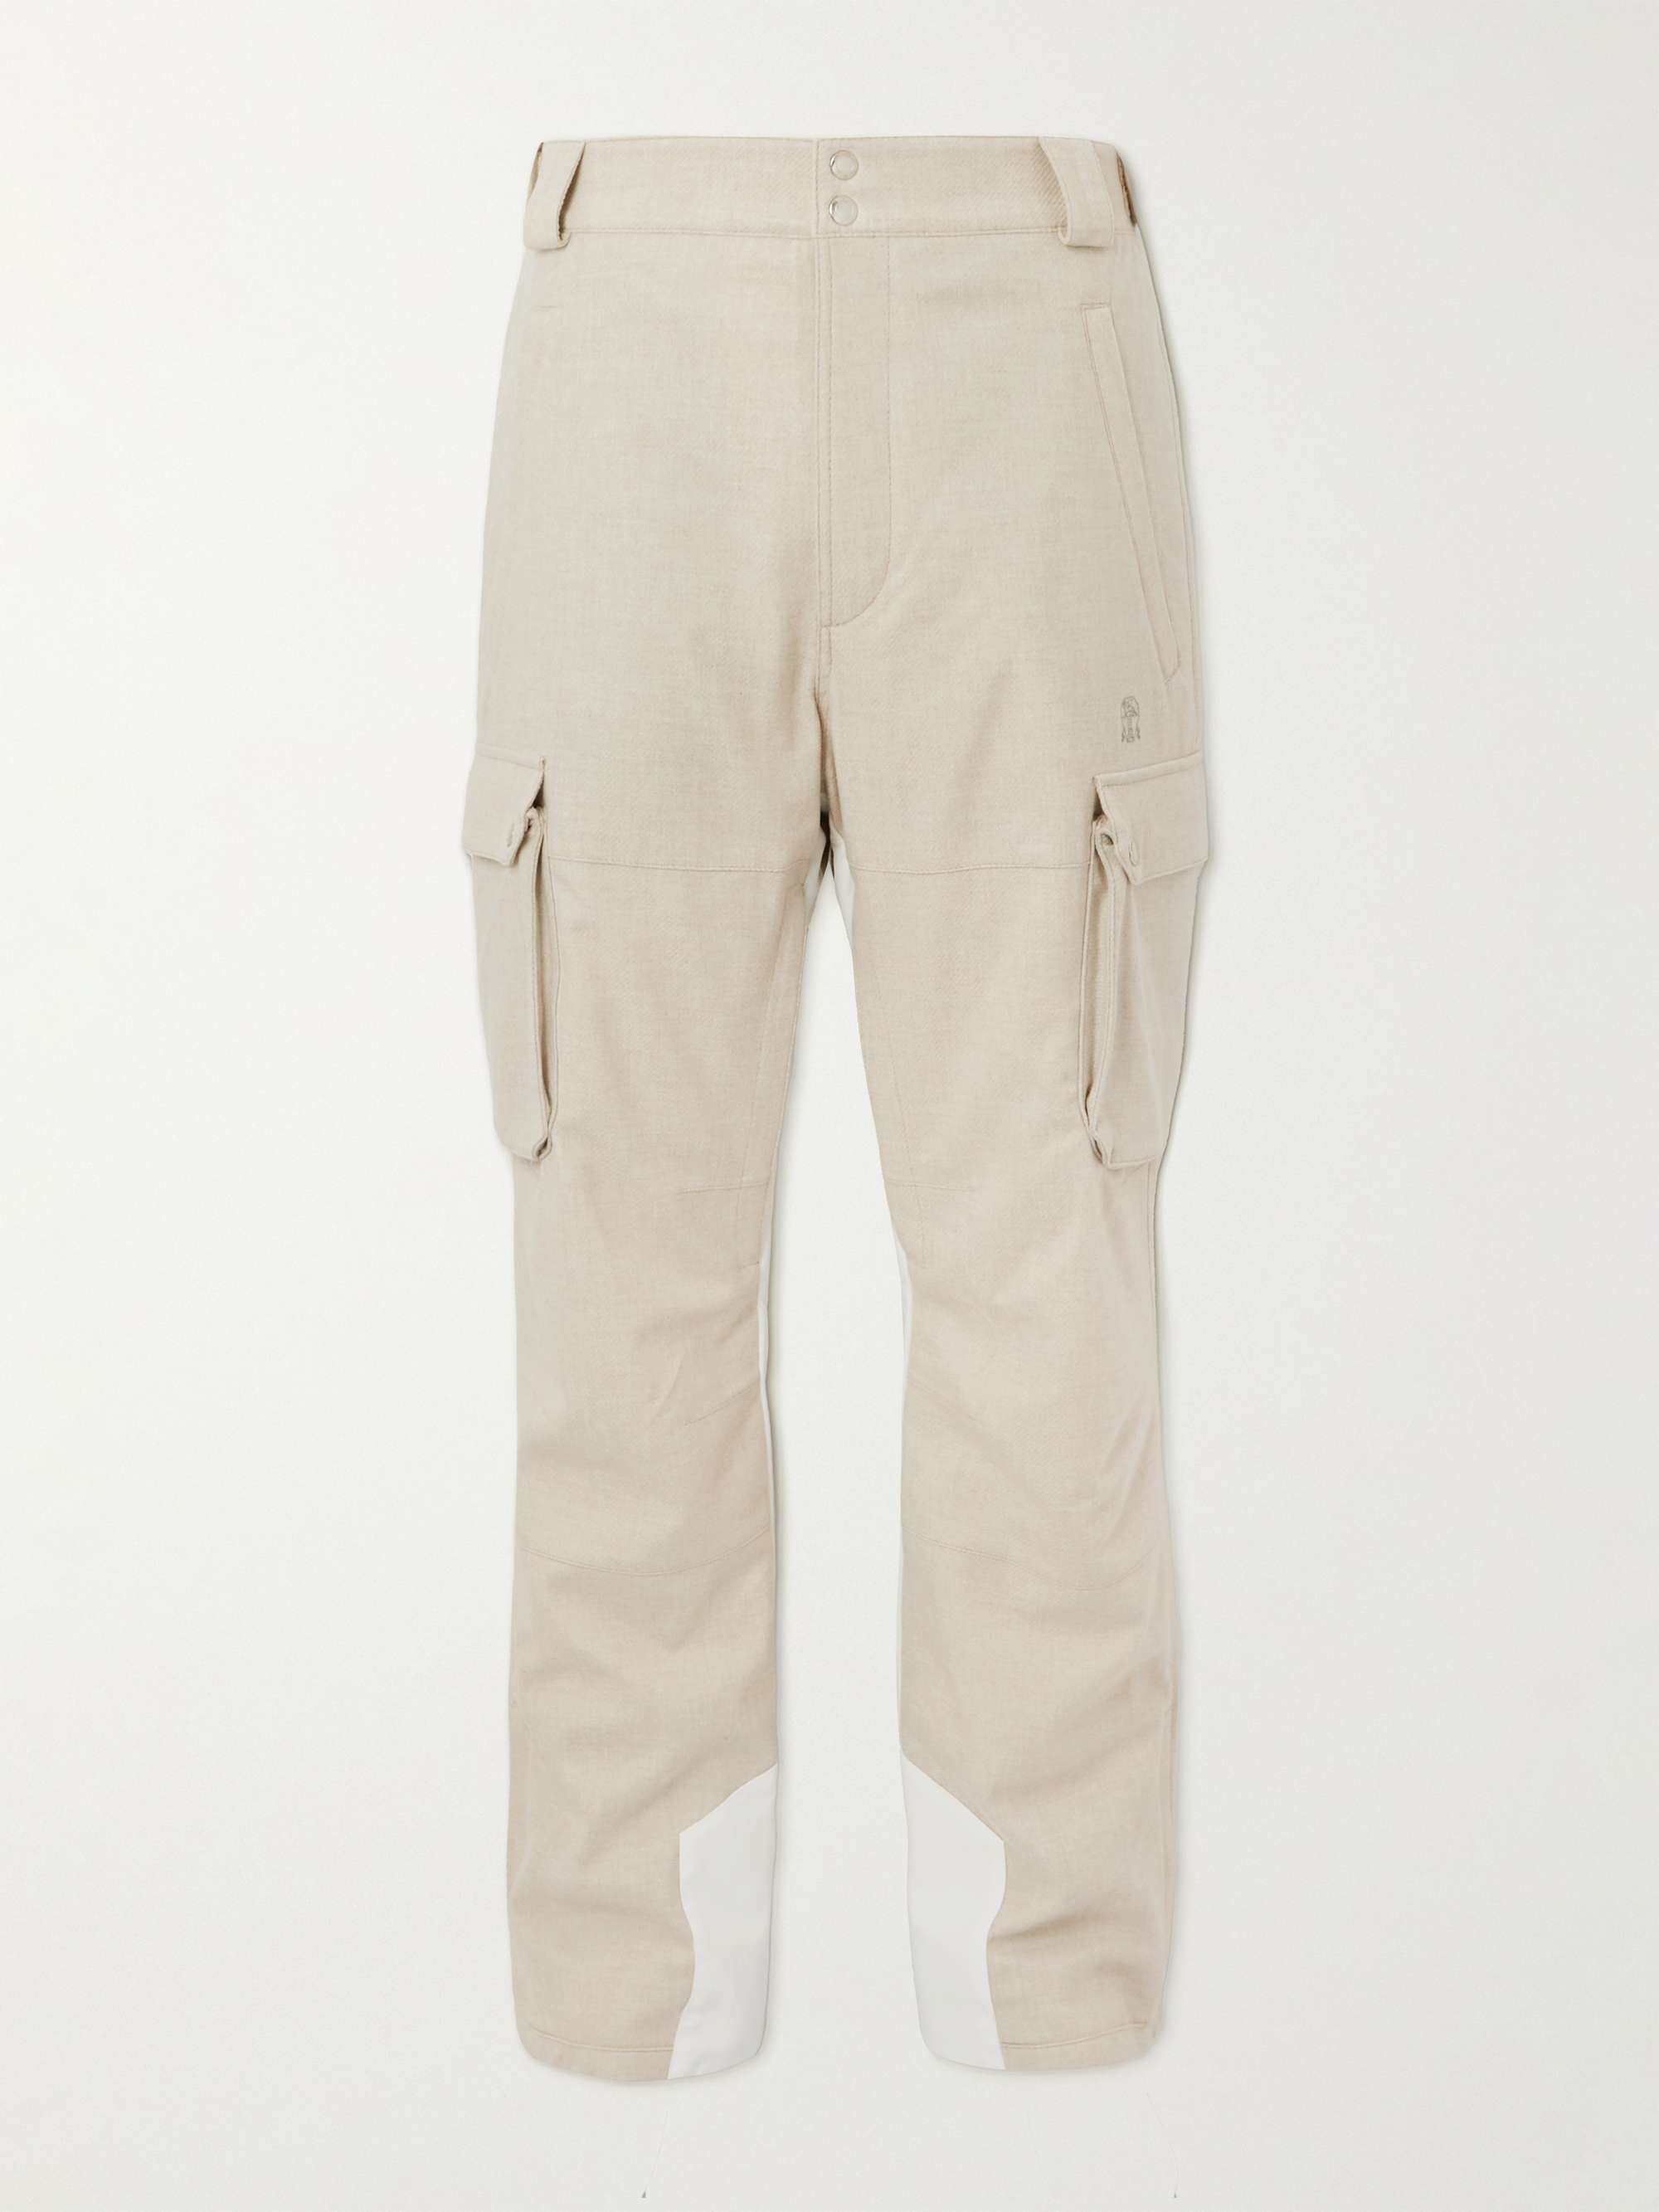 BRUNELLO CUCINELLI Shell-Trimmed Wool, Silk and Cashmere-Blend Ski Pants  for Men | MR PORTER